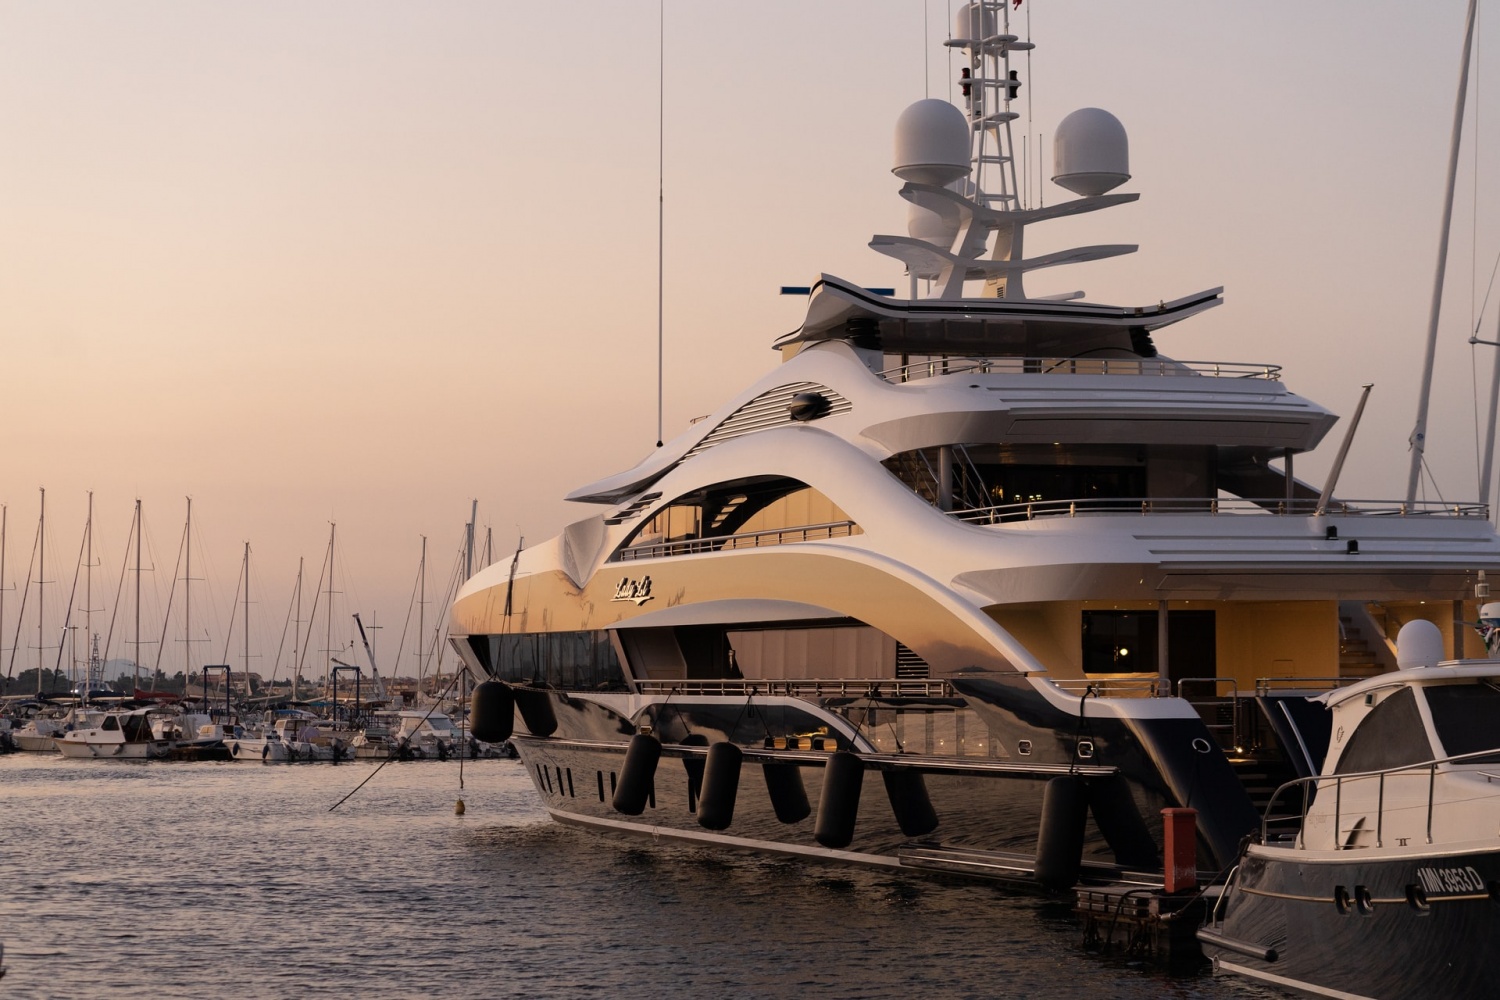 Virtual Metaverse Yacht Sold for $650K in The Sandbox